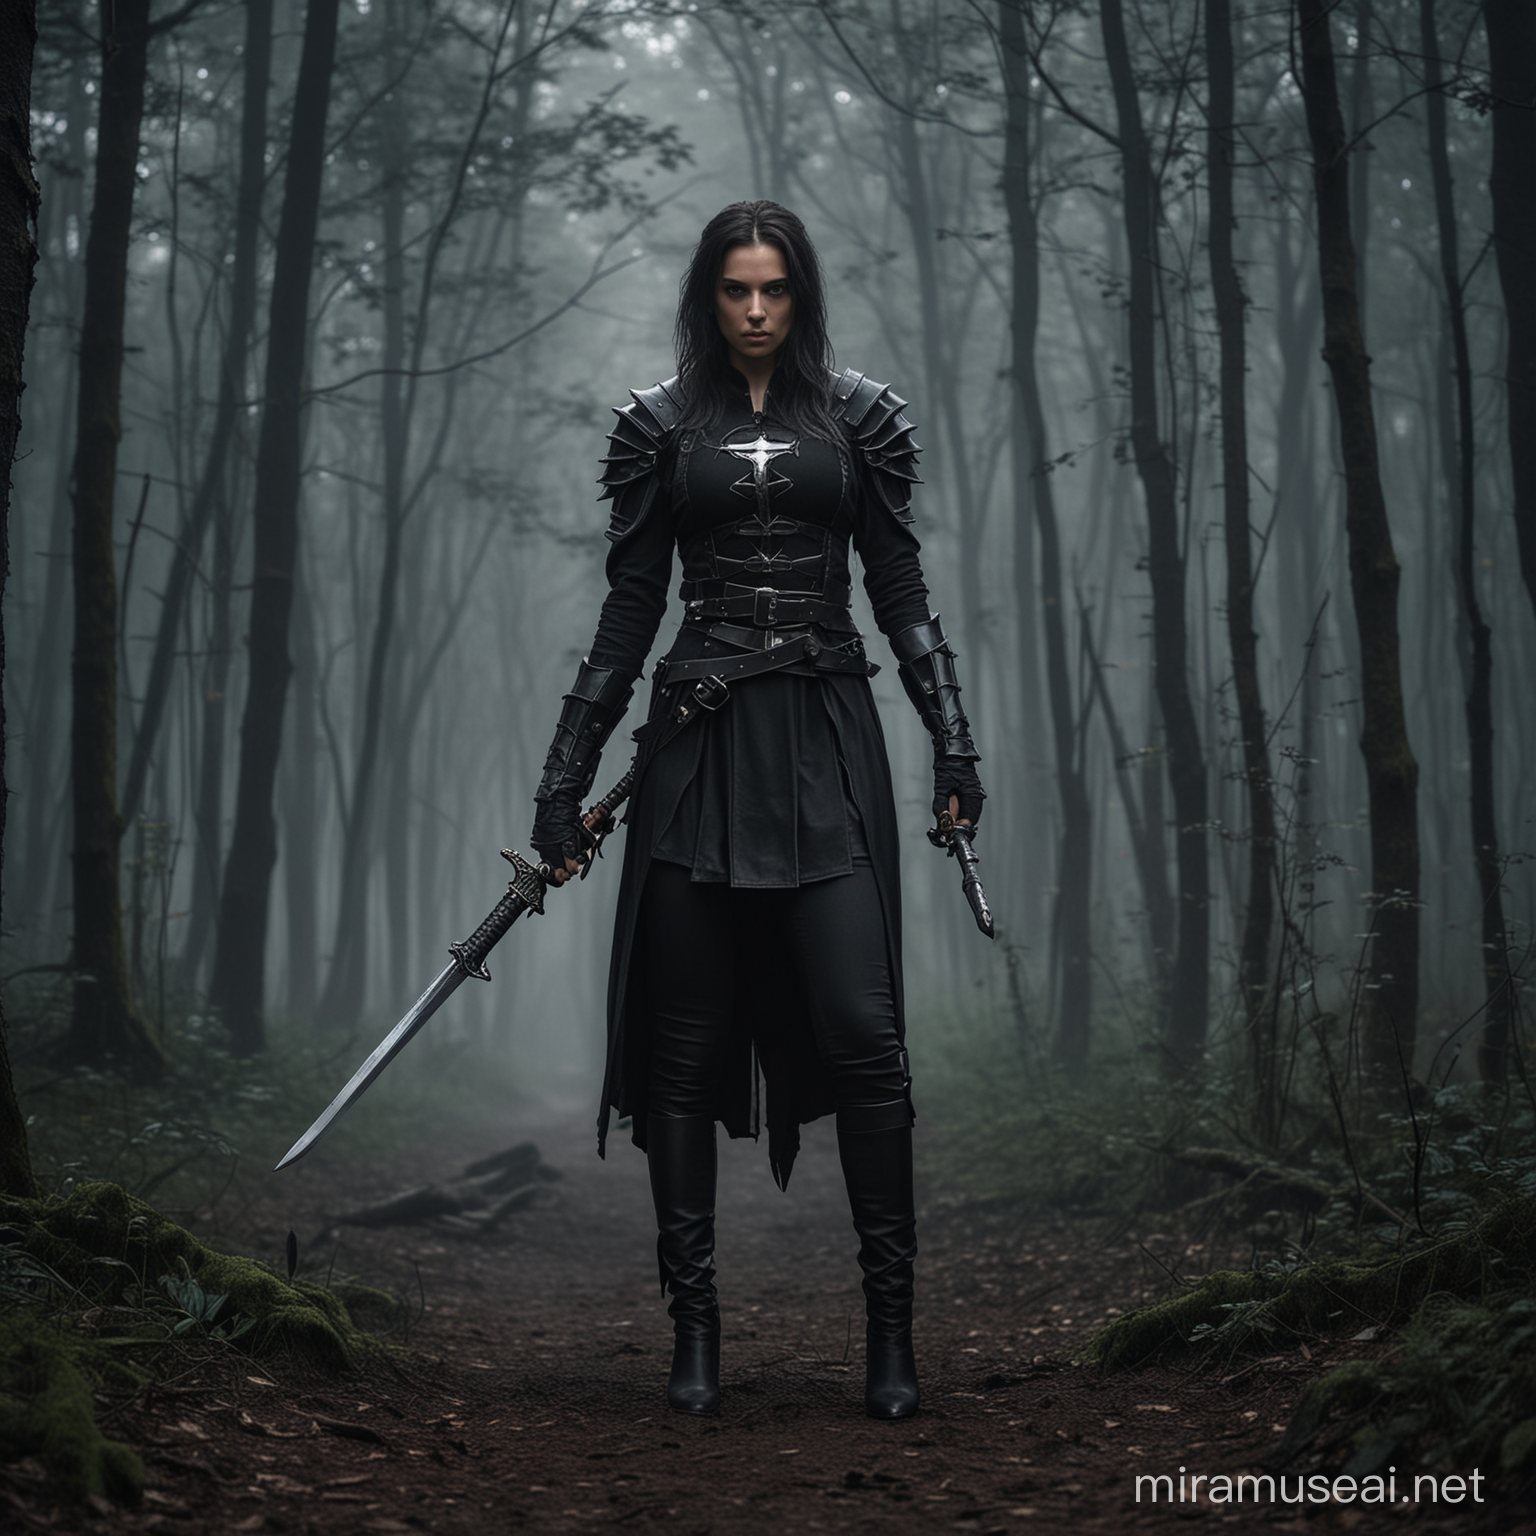 Dark Forest Warrior Mysterious Woman Wielding Sword in Shadowy Woods